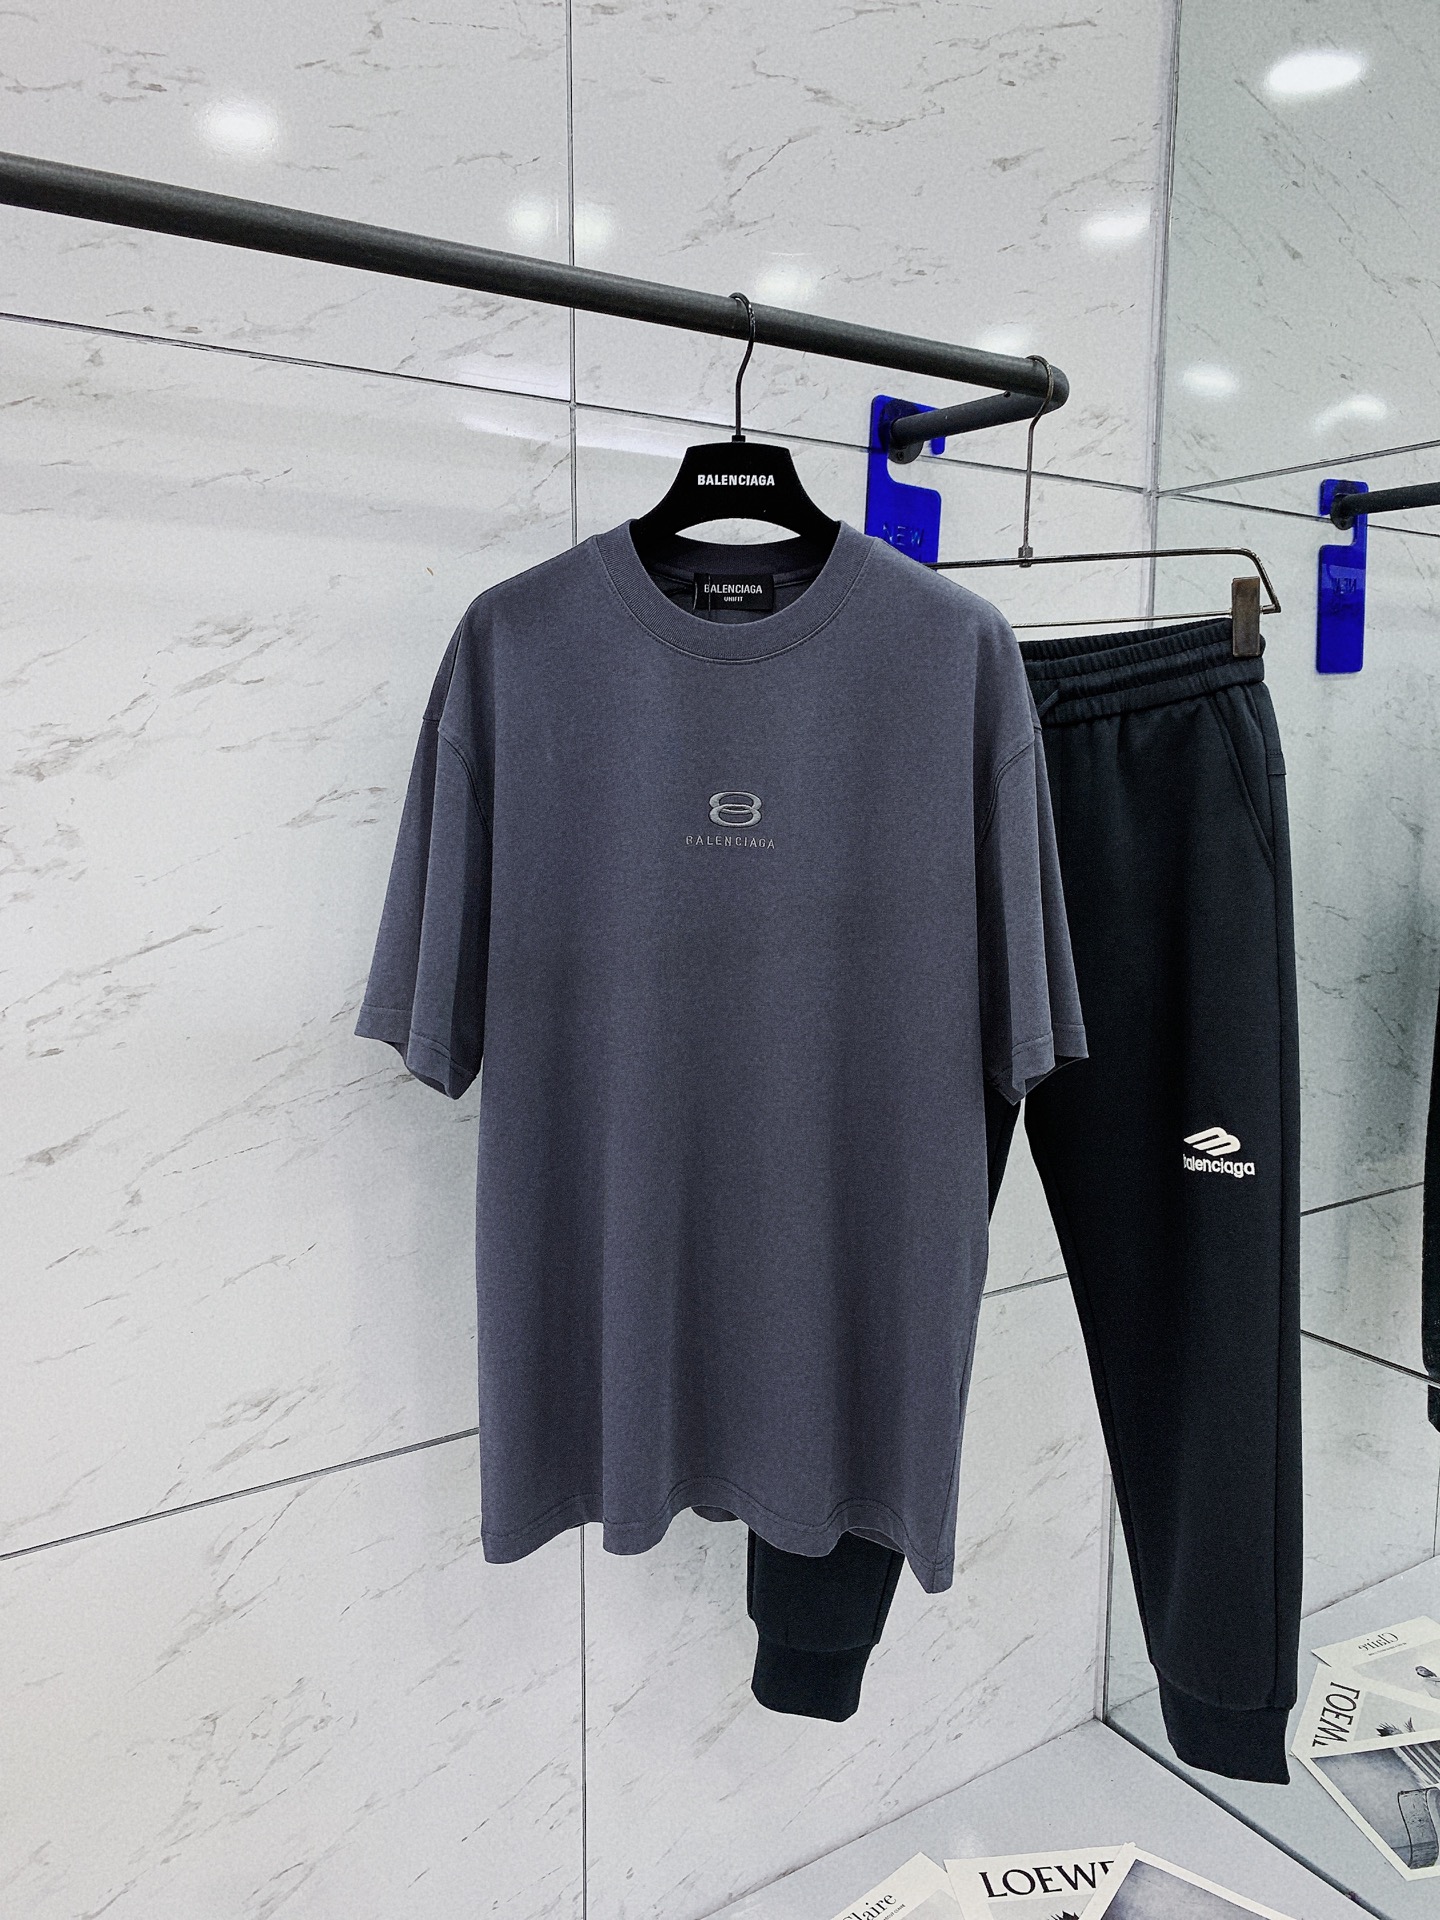 Balenciaga Clothing T-Shirt Designer Fashion Replica
 Embroidery Unisex Spring/Summer Collection Short Sleeve